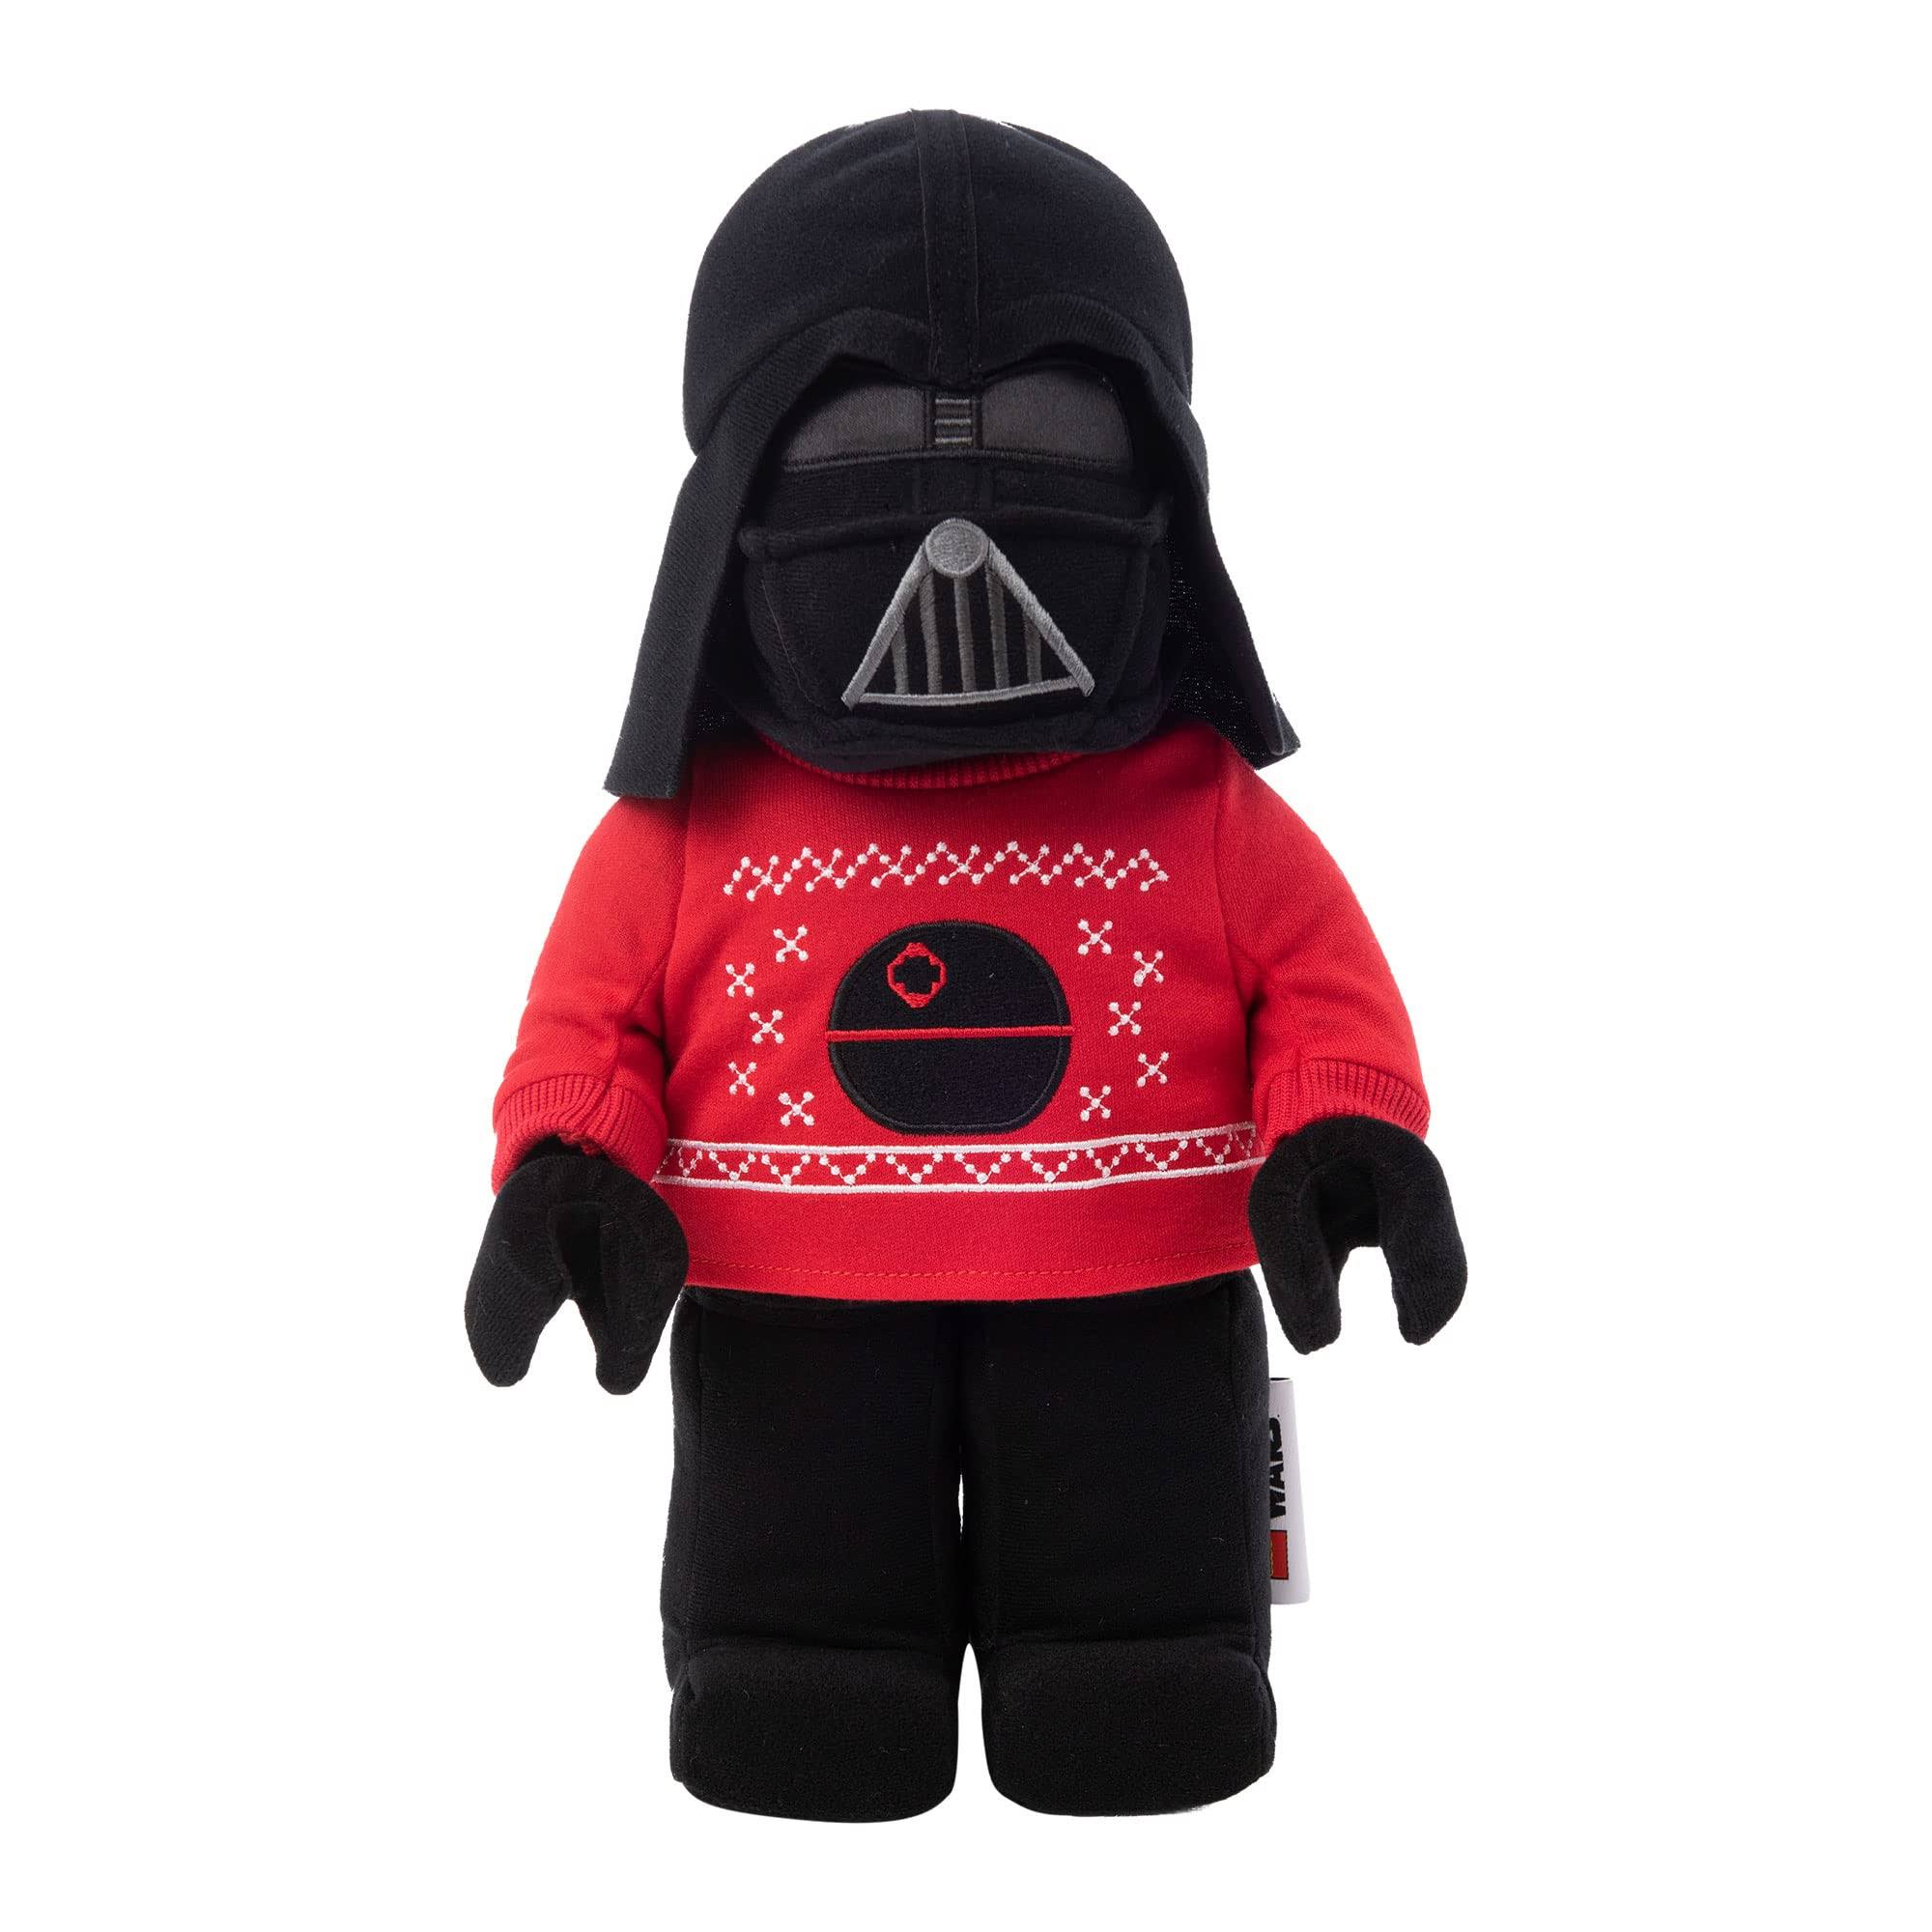 Manhattan Toy Lego Star Wars Darth Vader Holiday Plush Character